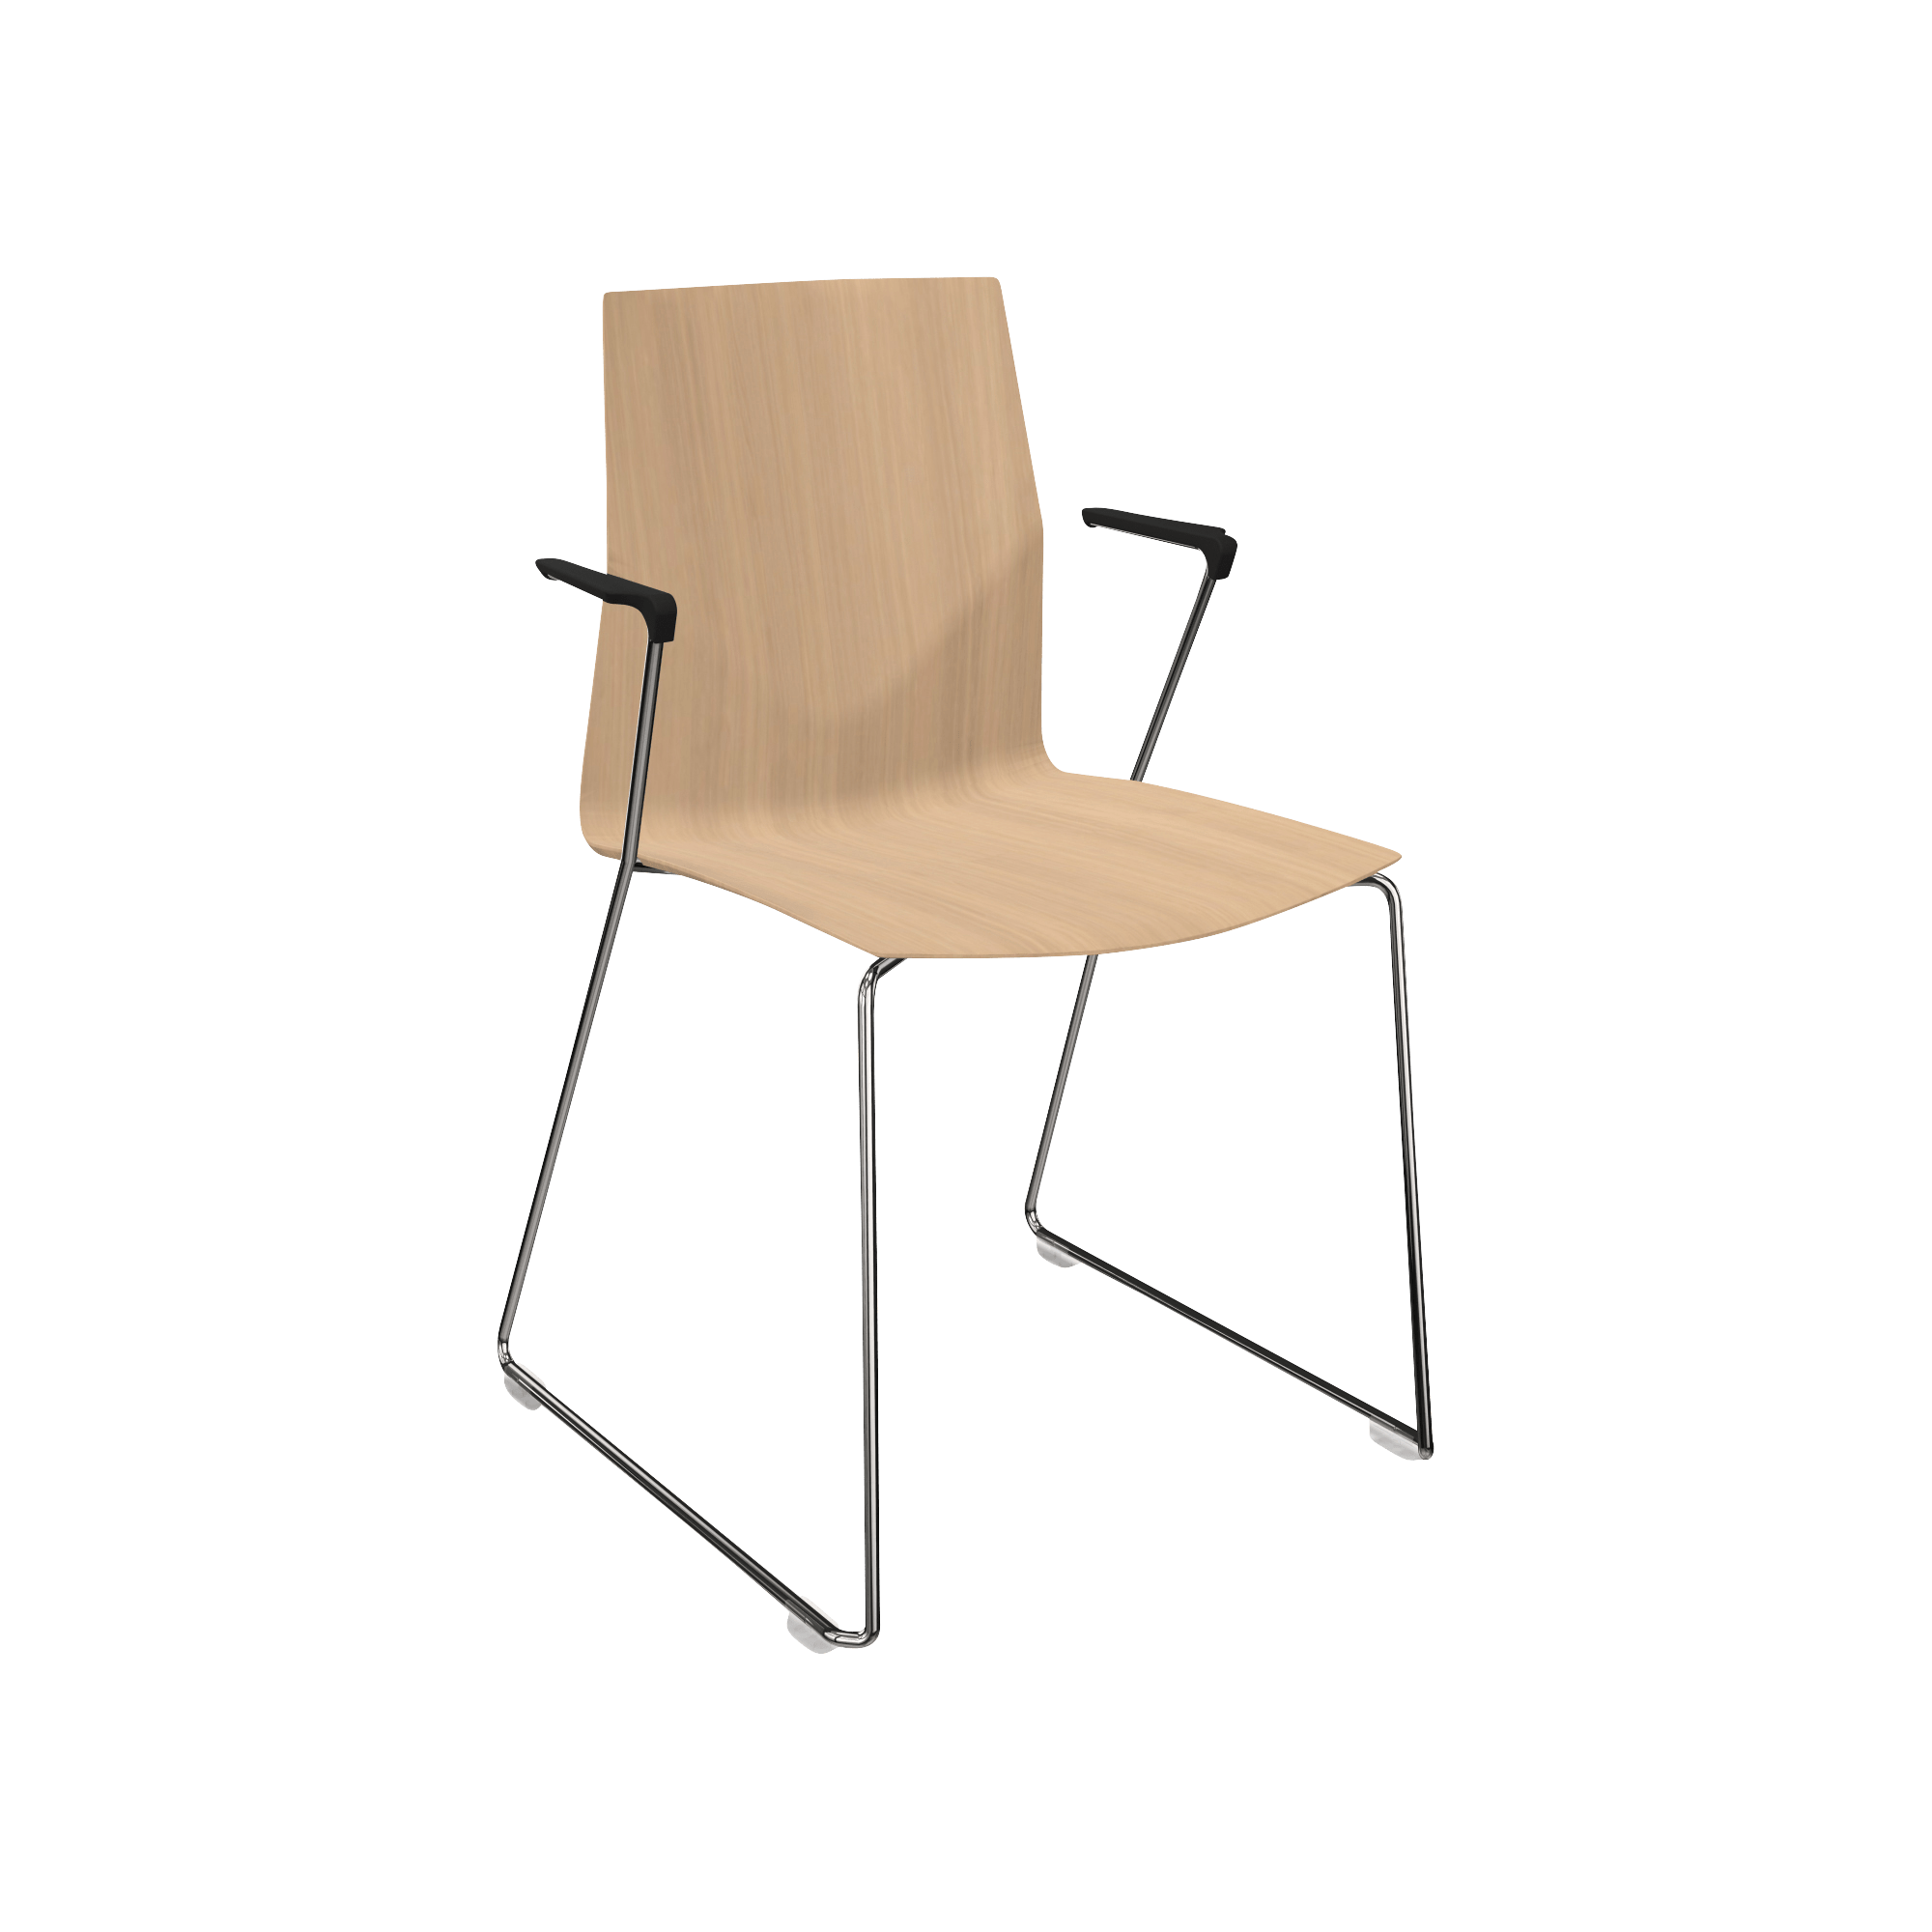 A designer office desk chair